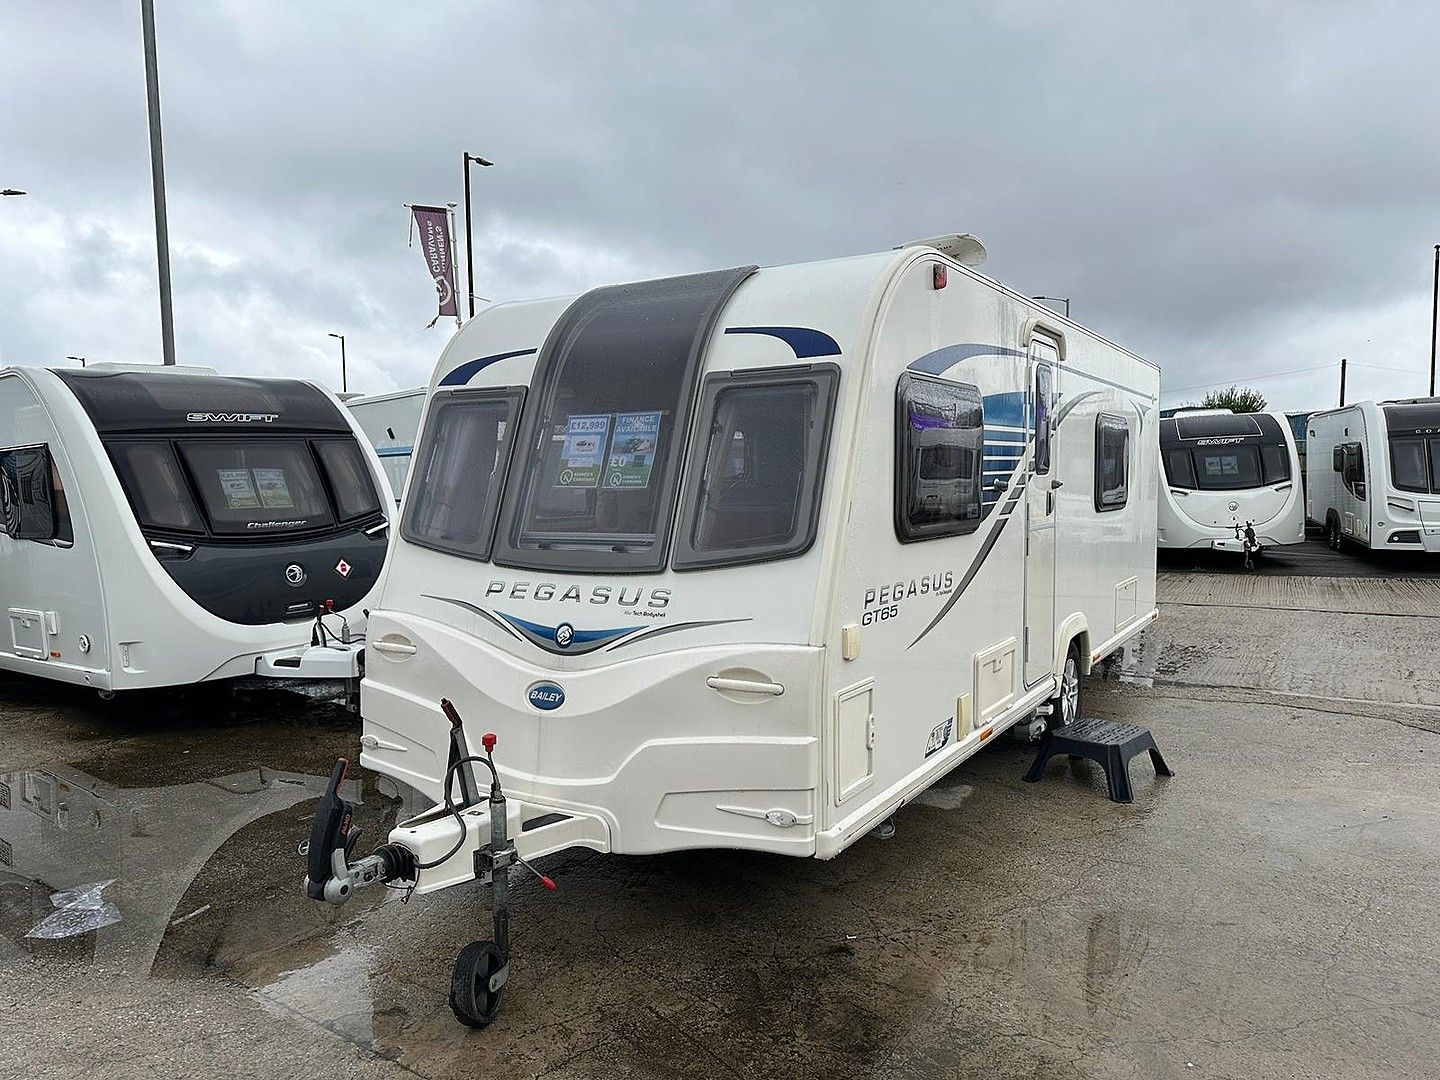 BaileyPegasus RiminiTouring Caravan for sale